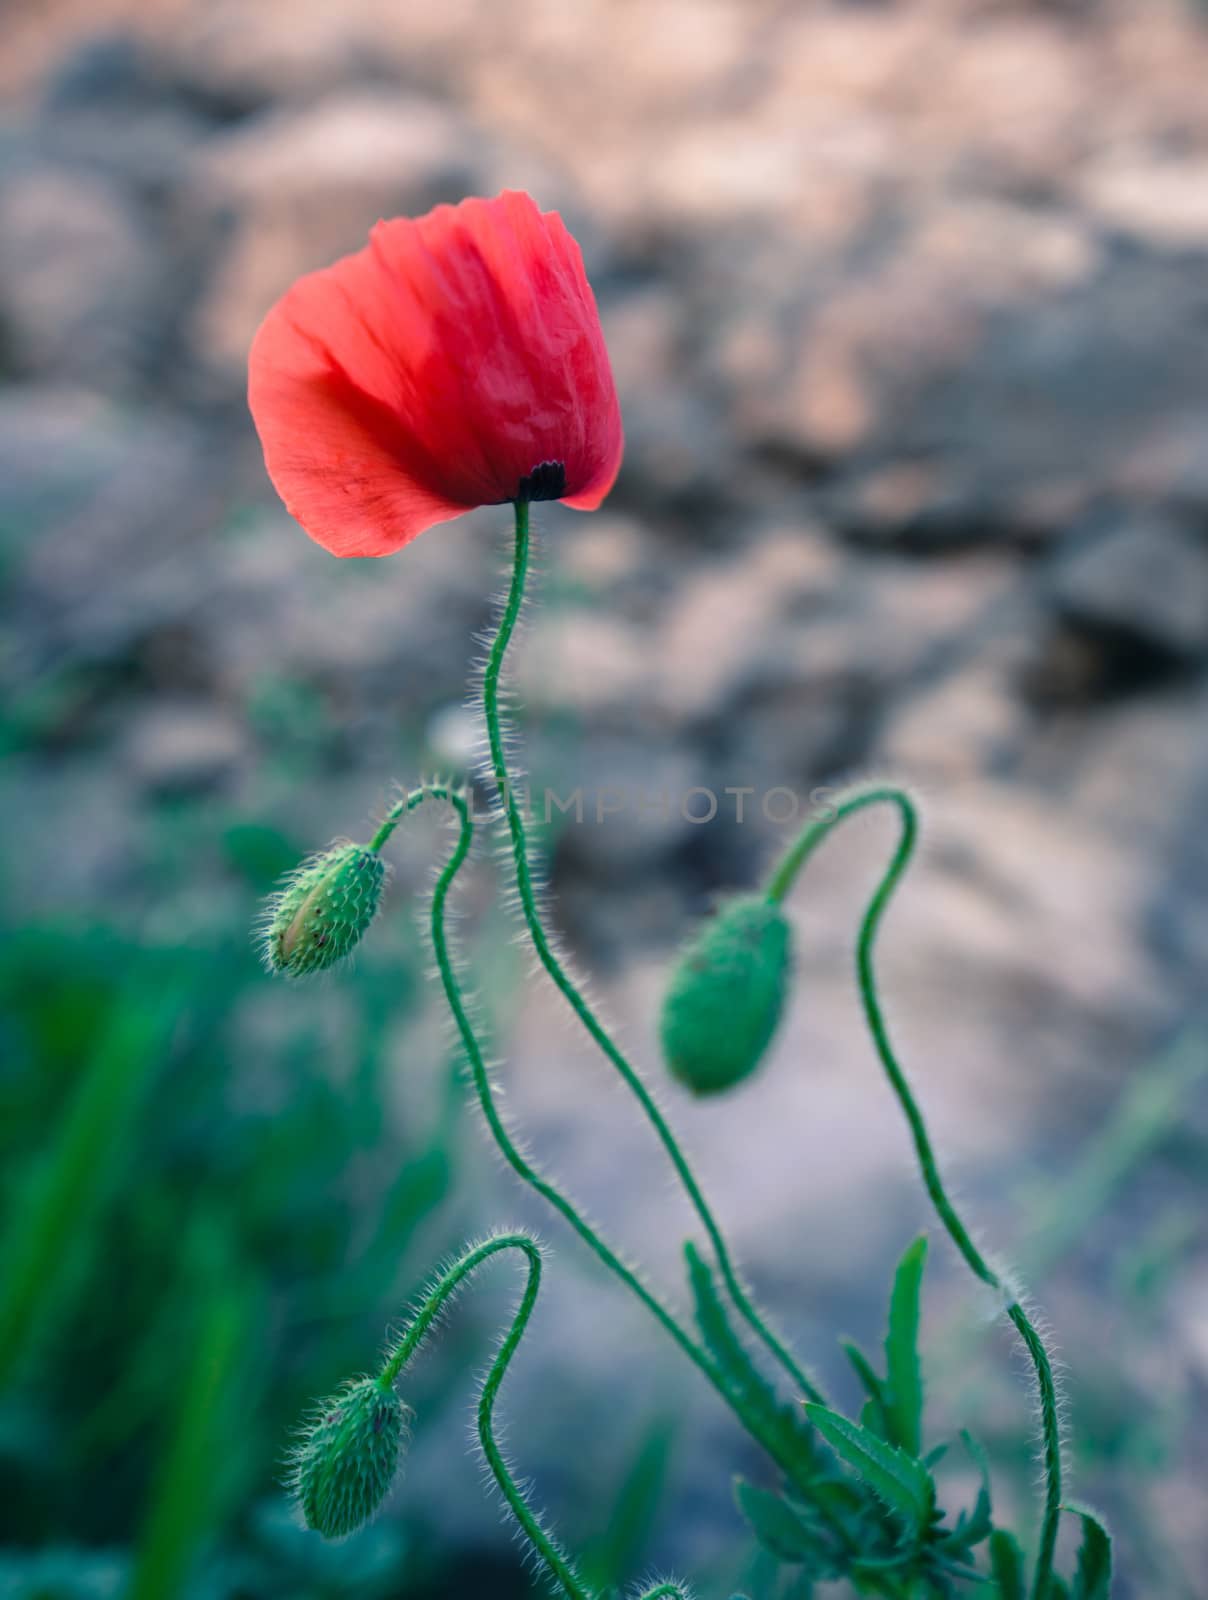 poppy flower by GekaSkr